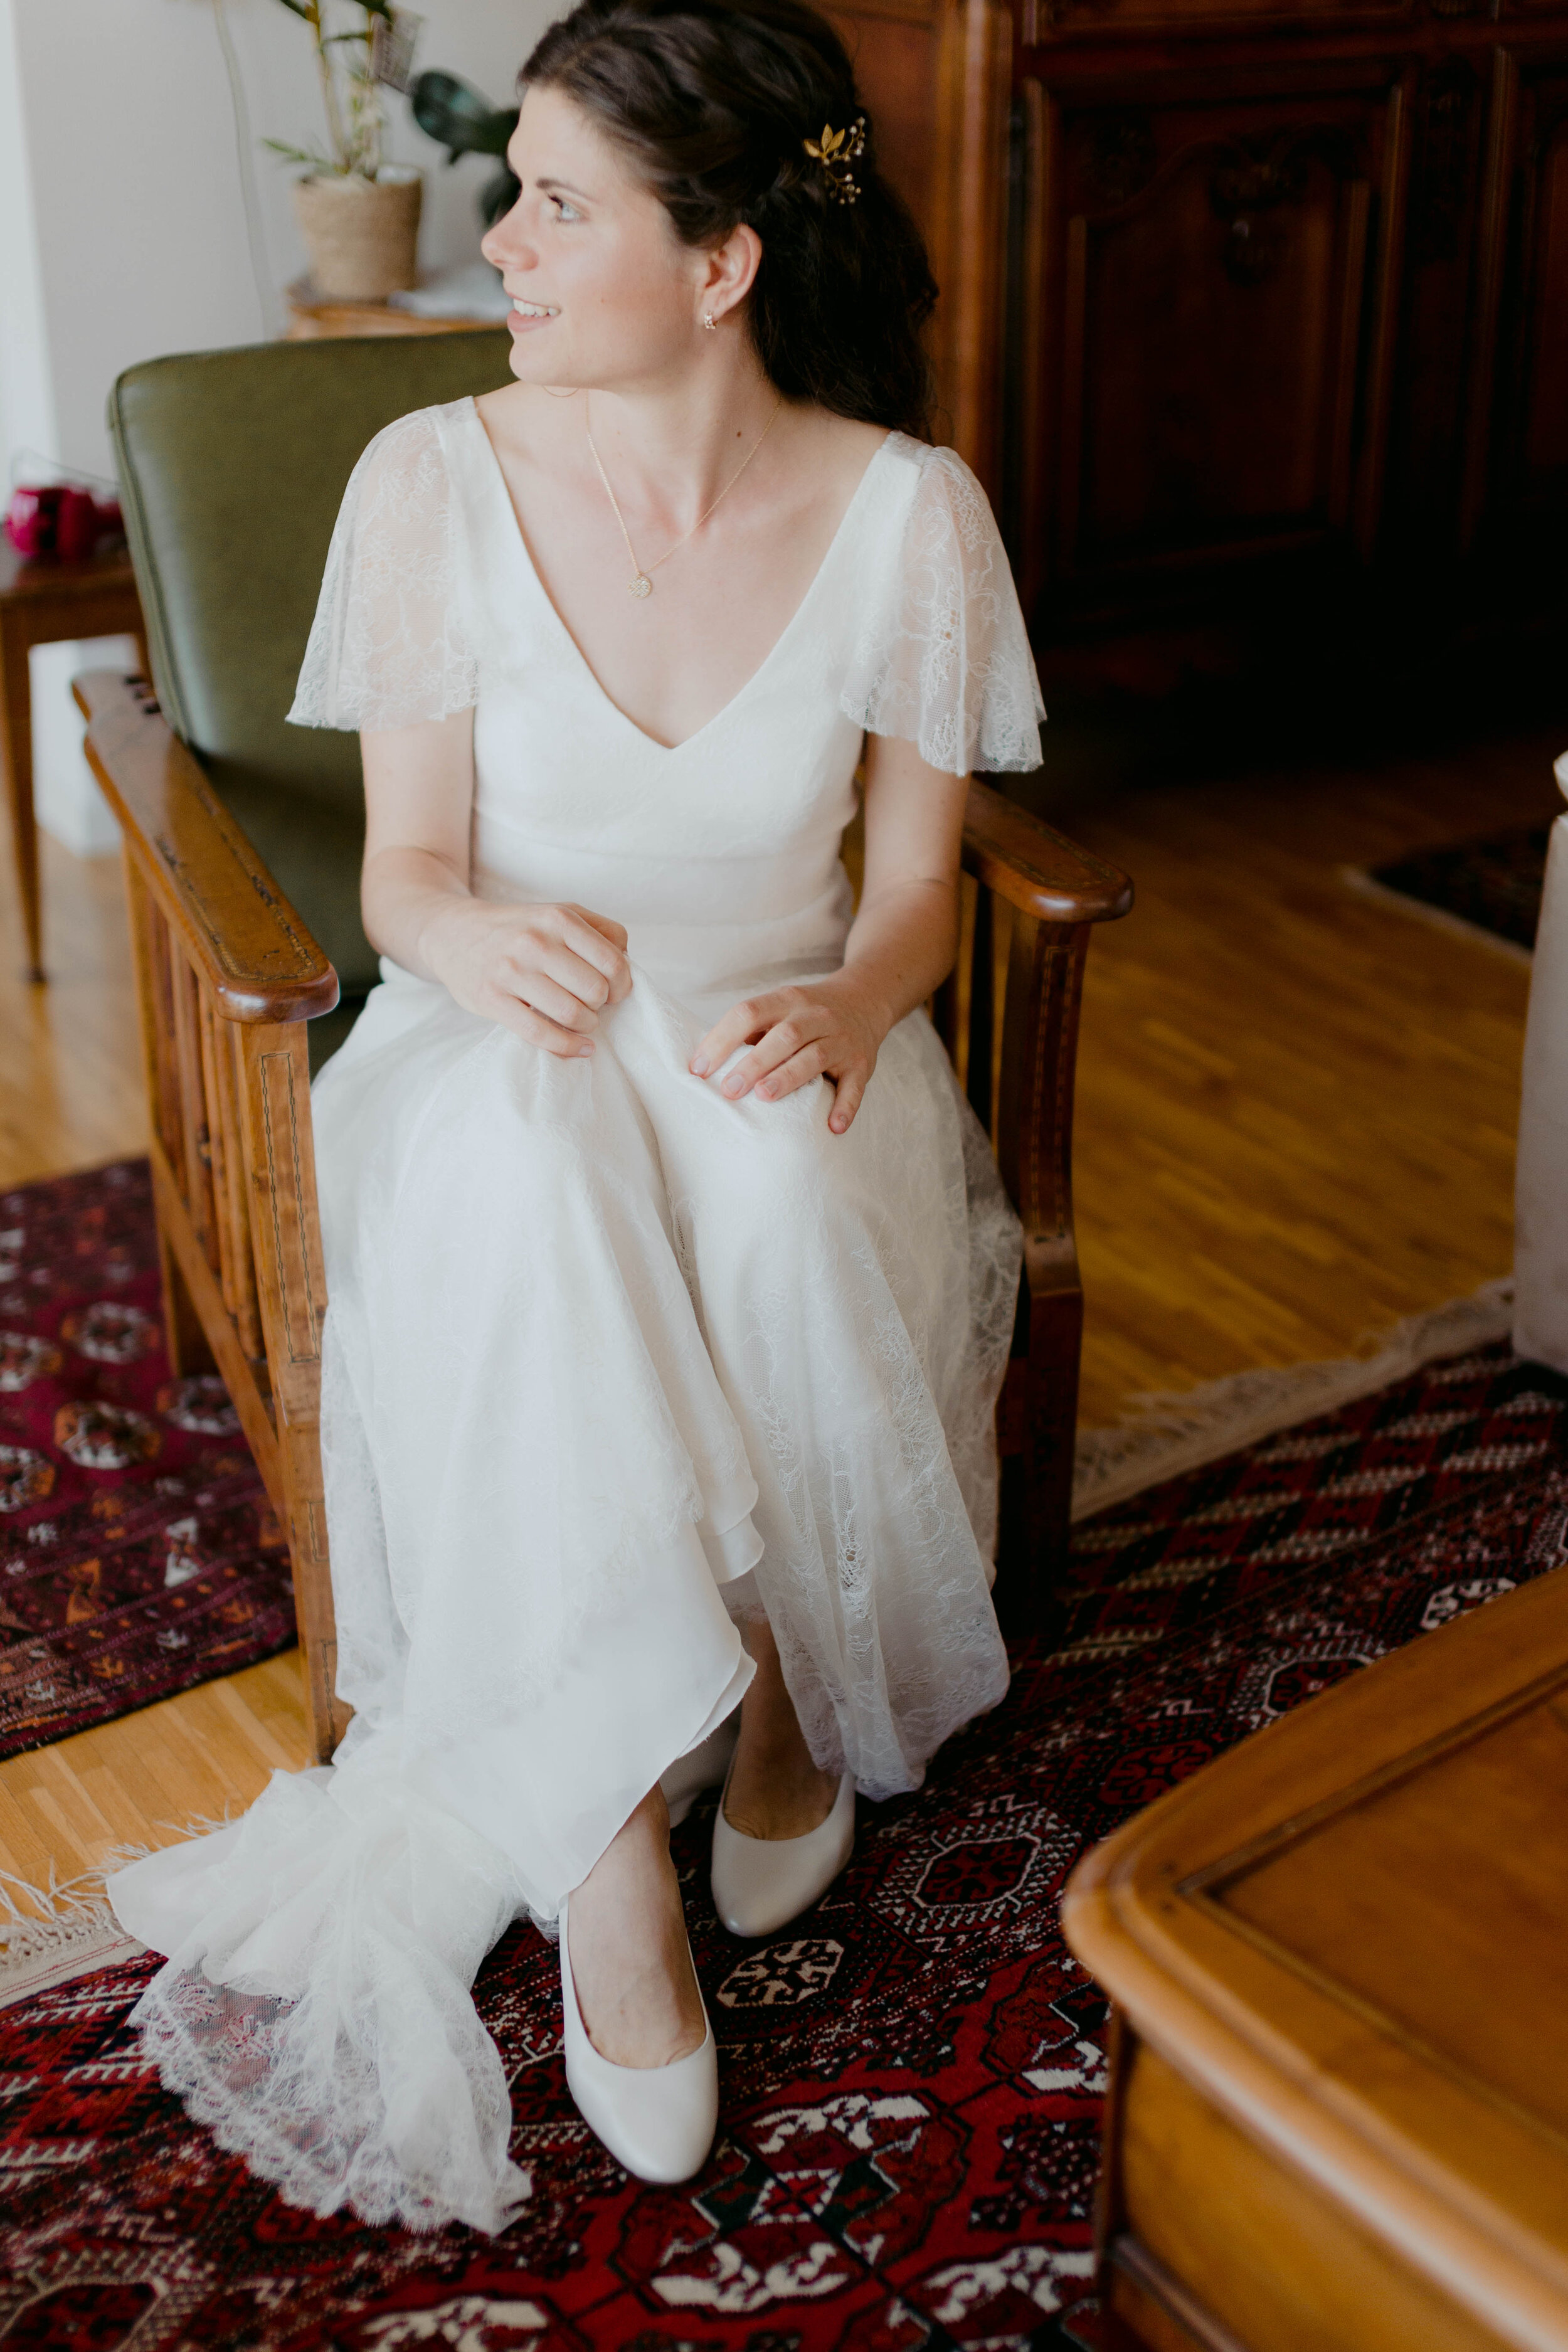 012 - Preparazione sposa - Miriam Callegari Fotografa.jpg